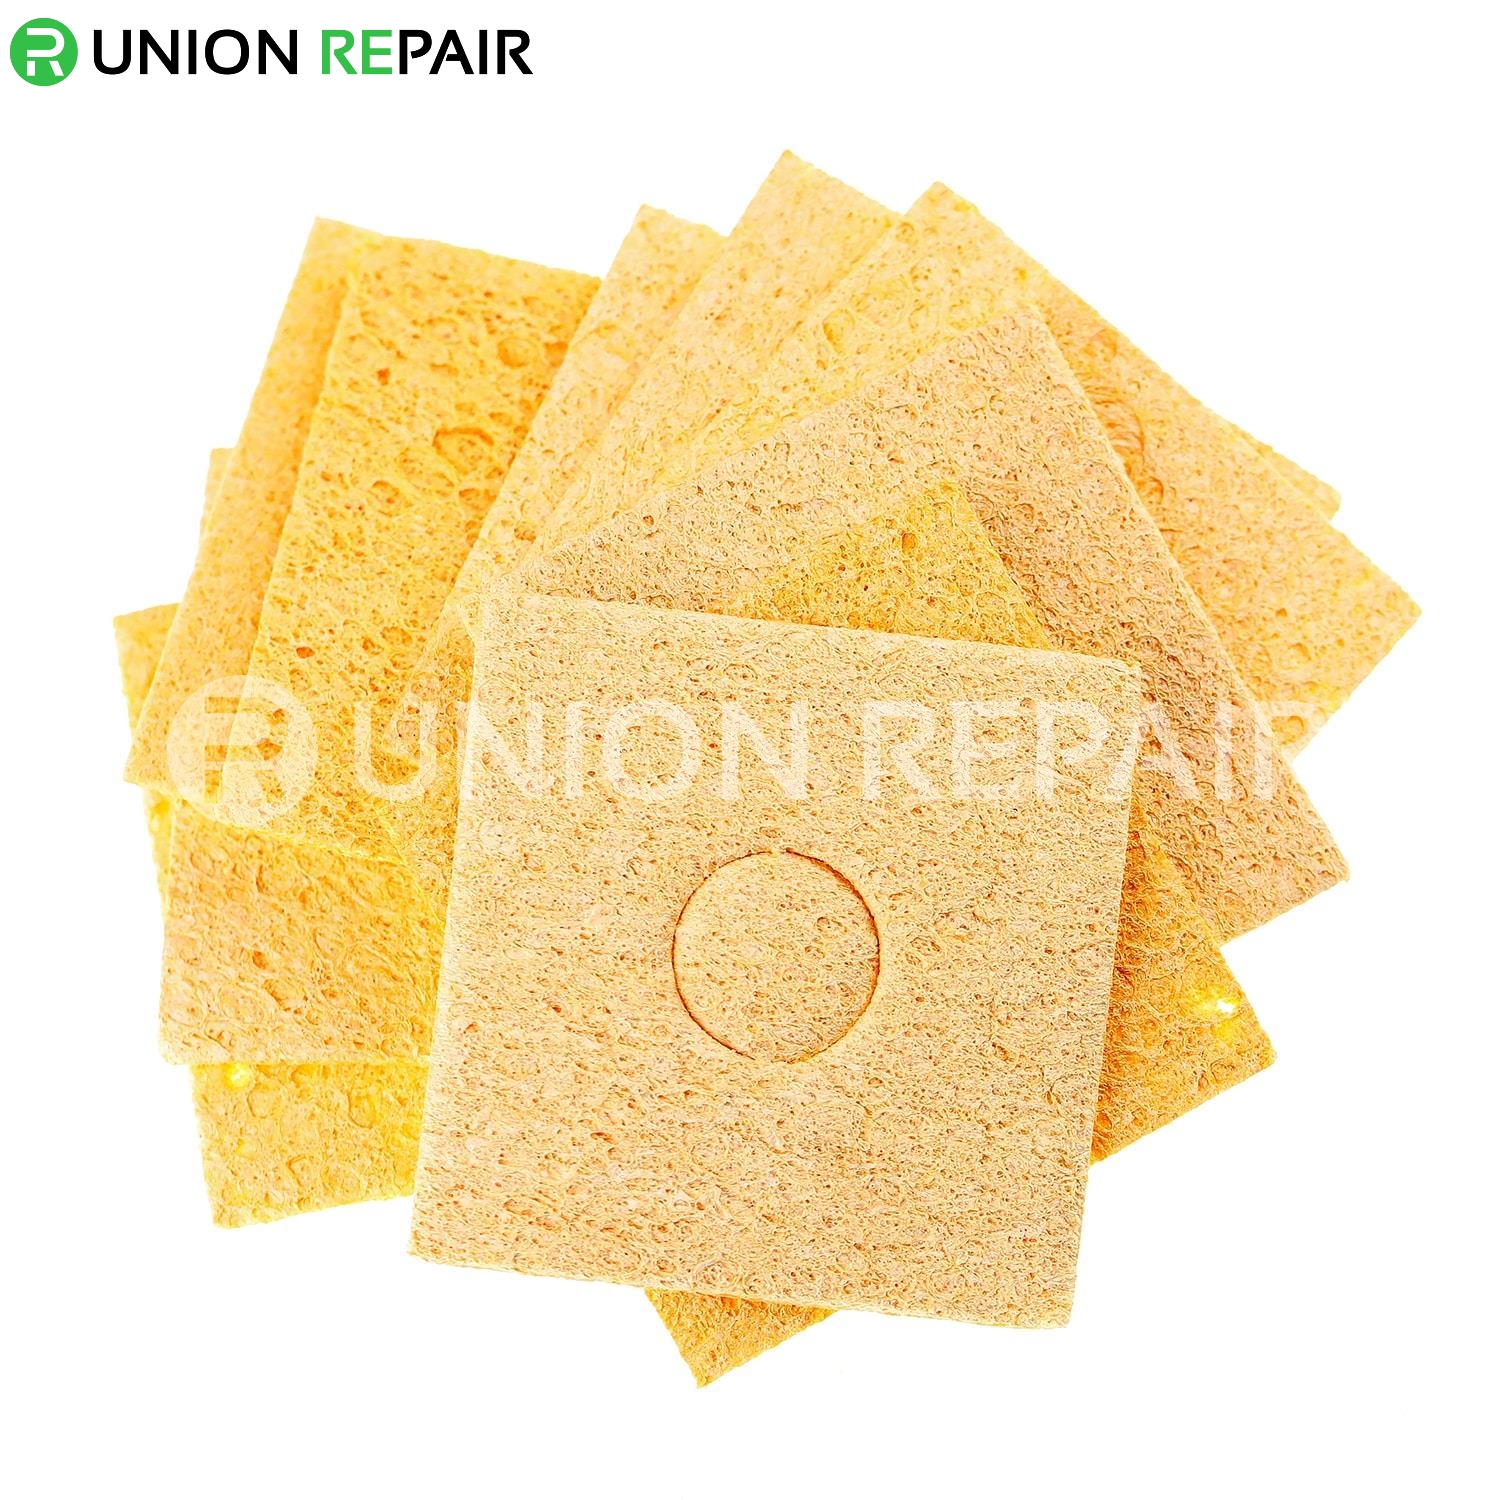 https://images.unionrepair.com/images/watermarked/1/detailed/26/17311-welding-soldering-iron-cleaning-sponge-5.55.5cm-10pcs-pack-1.jpg?t=1701258471